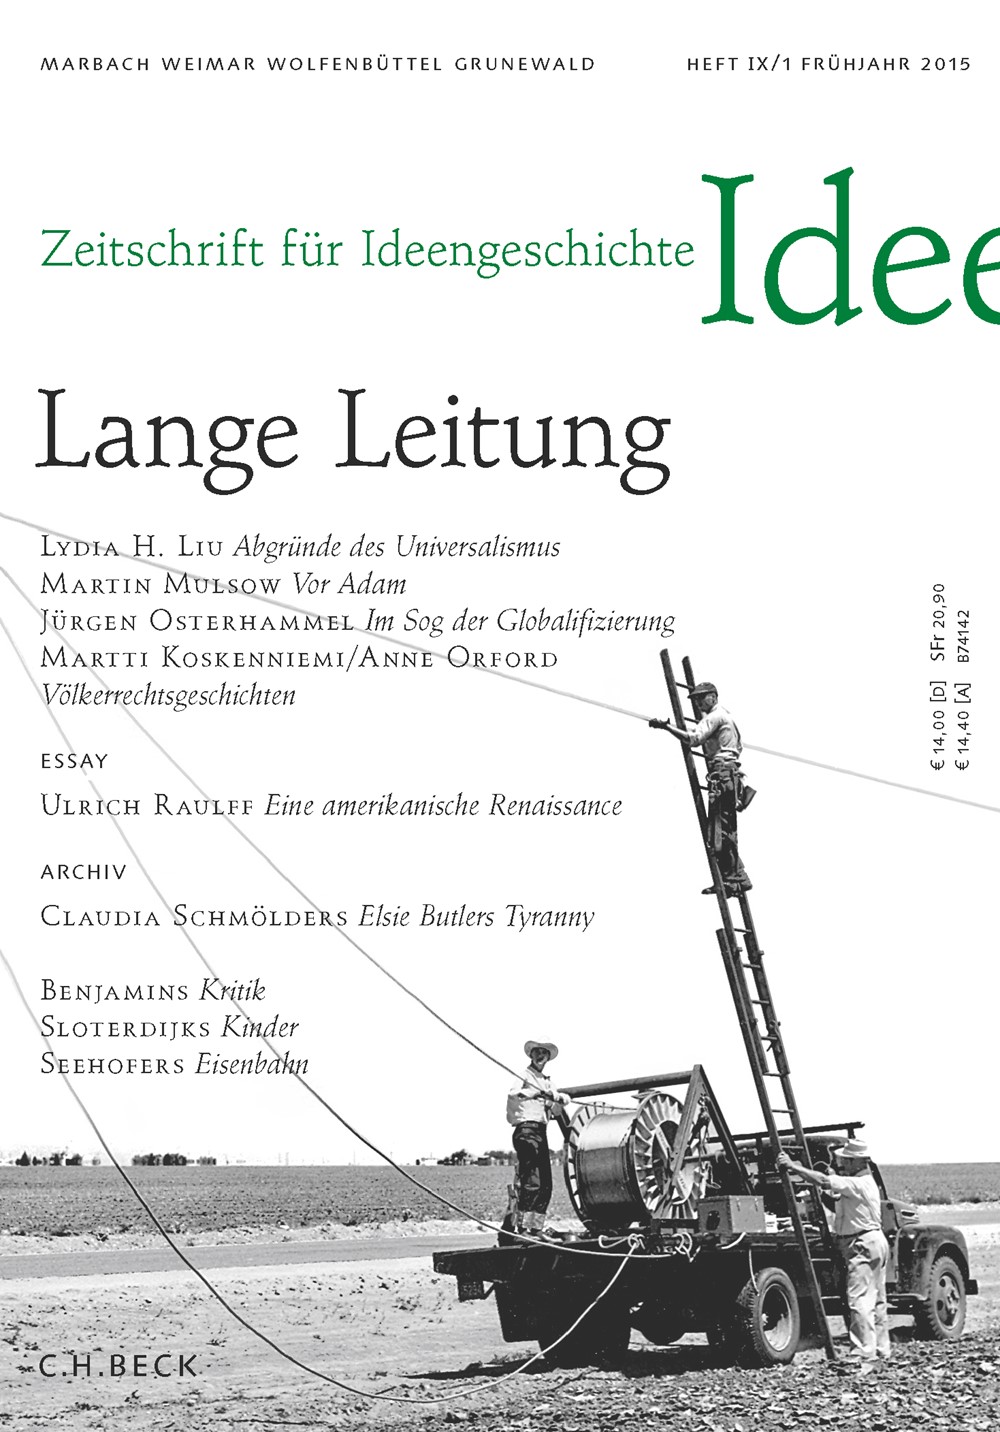 cover of Heft IX/1 Frühjahr 2015